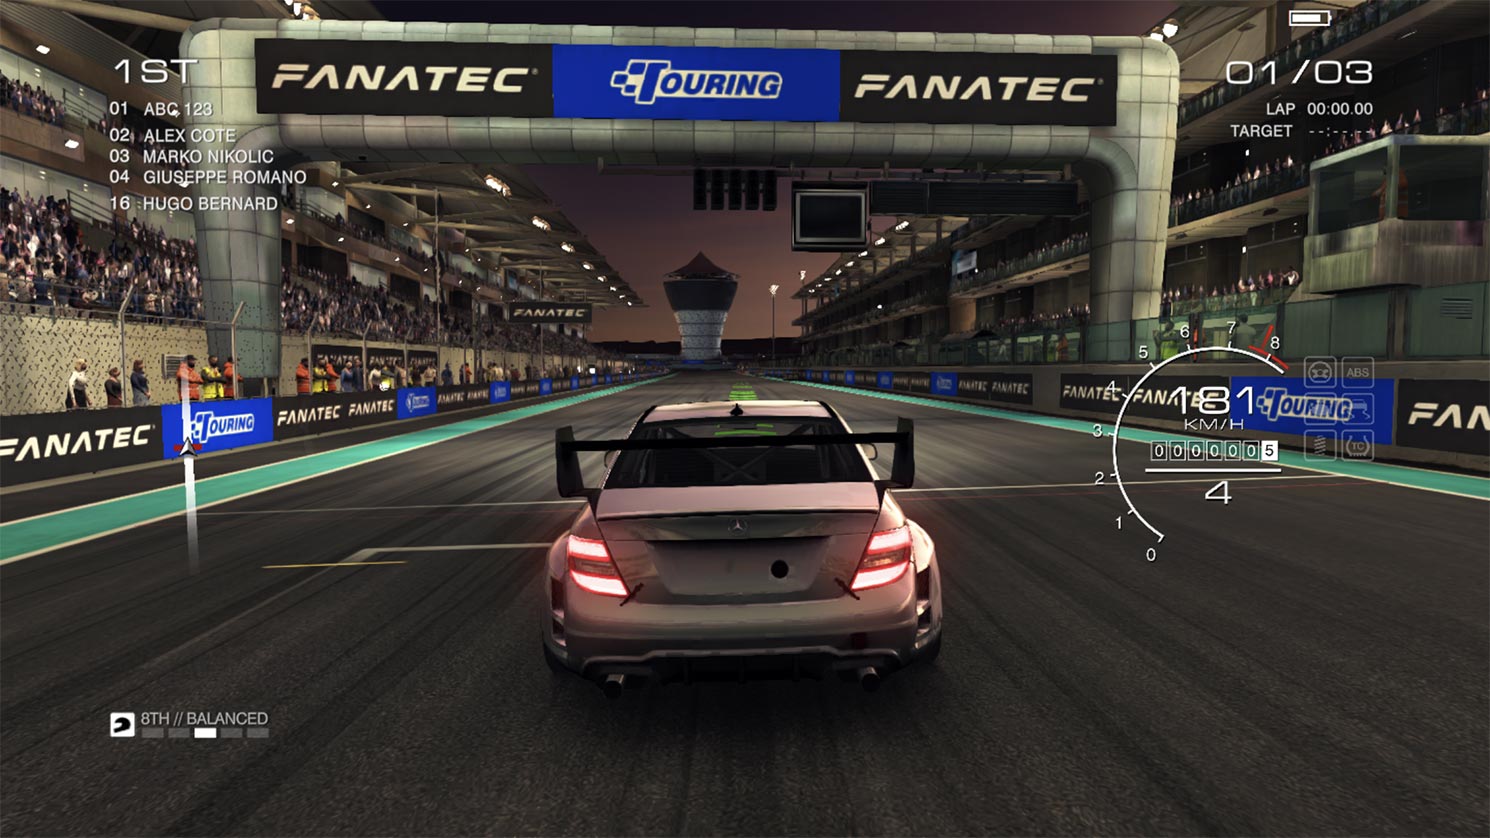 Grid Autosport Custom Edition Android Gameplay